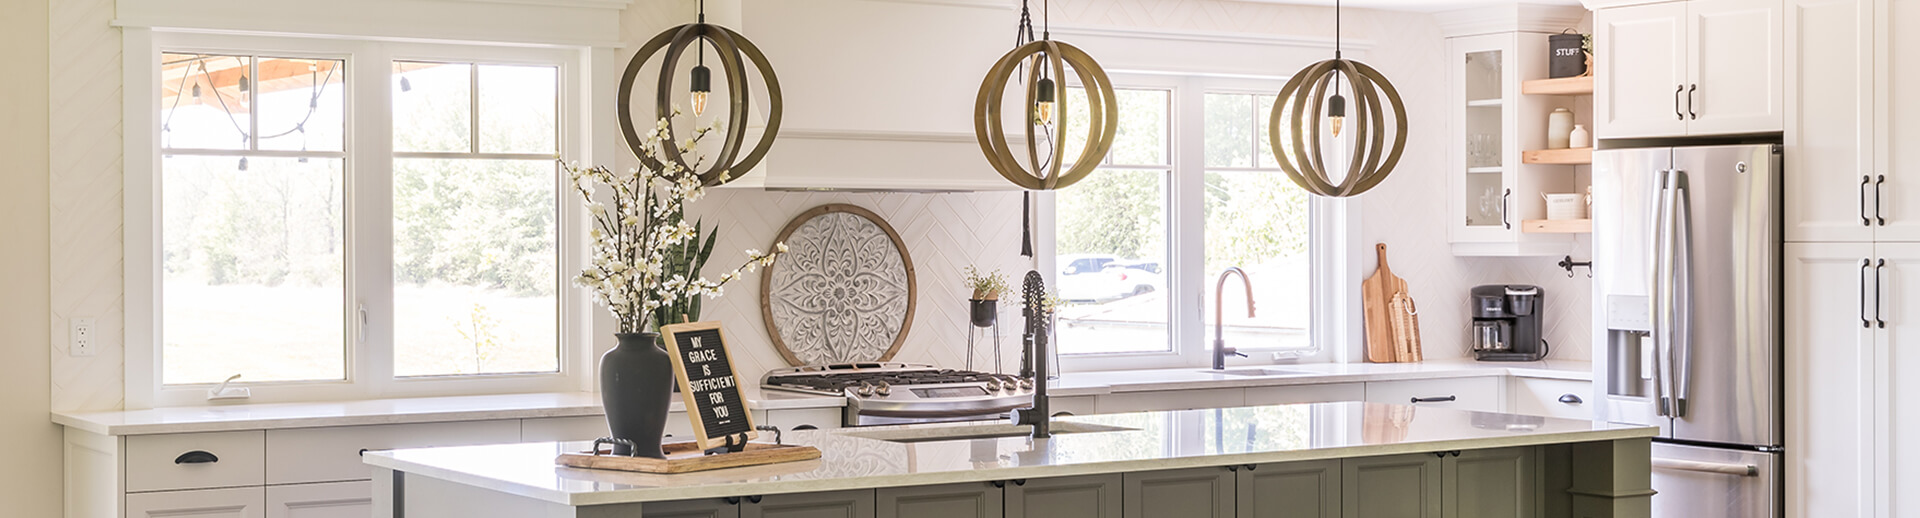 elegant custom kitchen with warm natural light